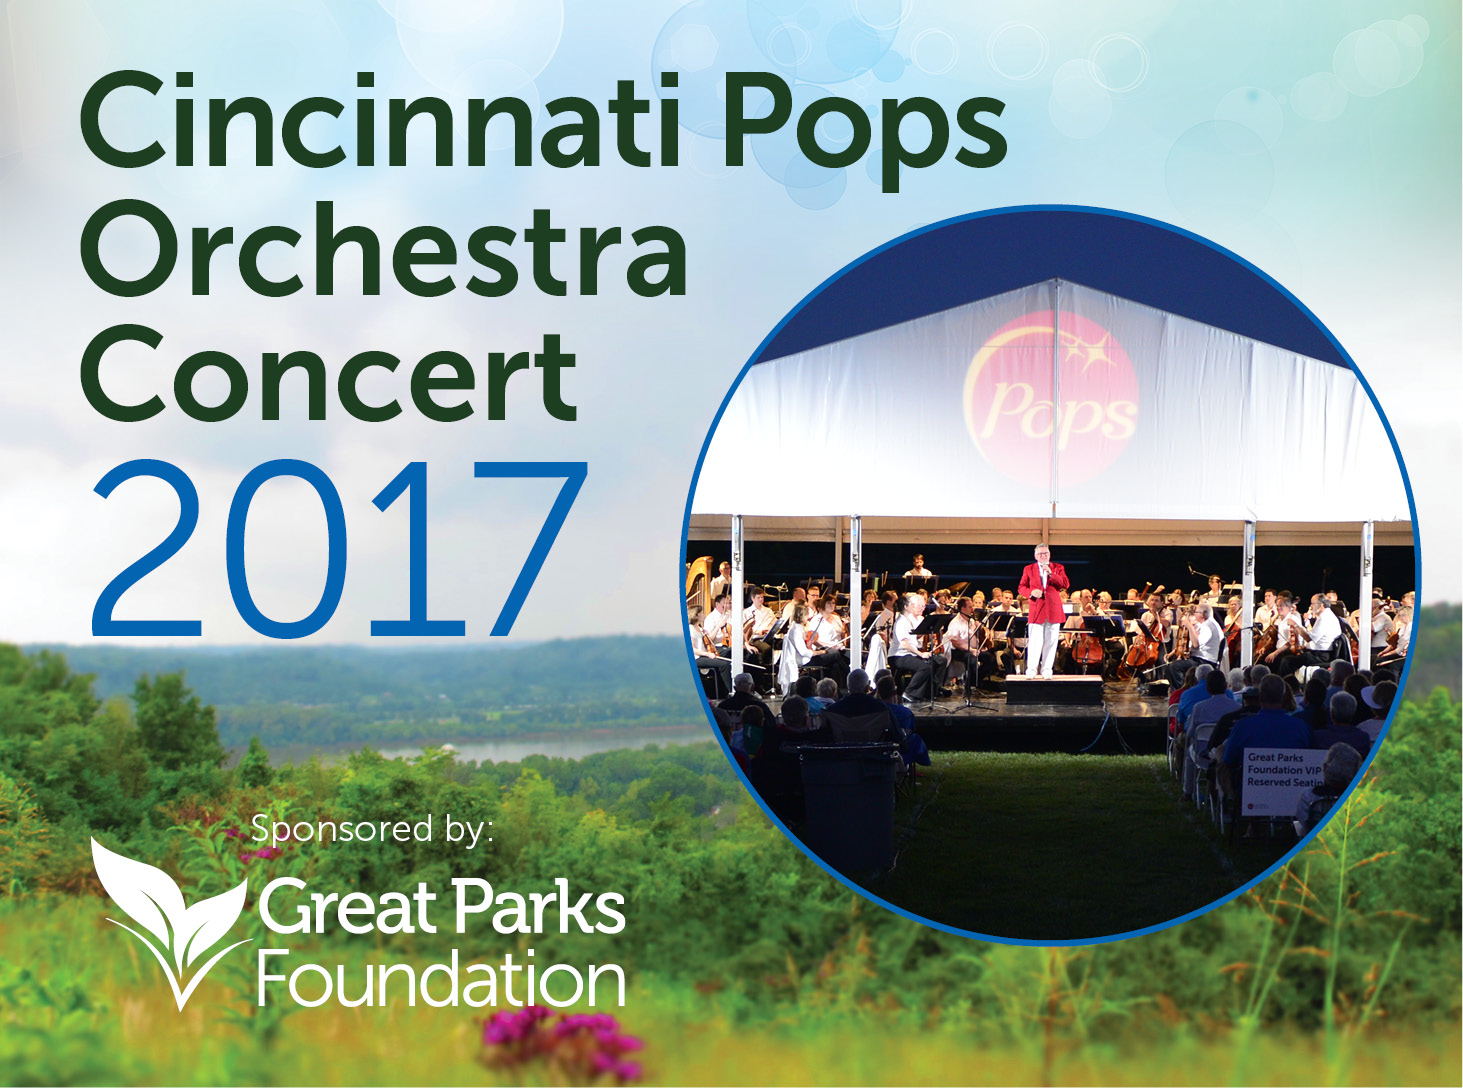 Great Parks - Concerts